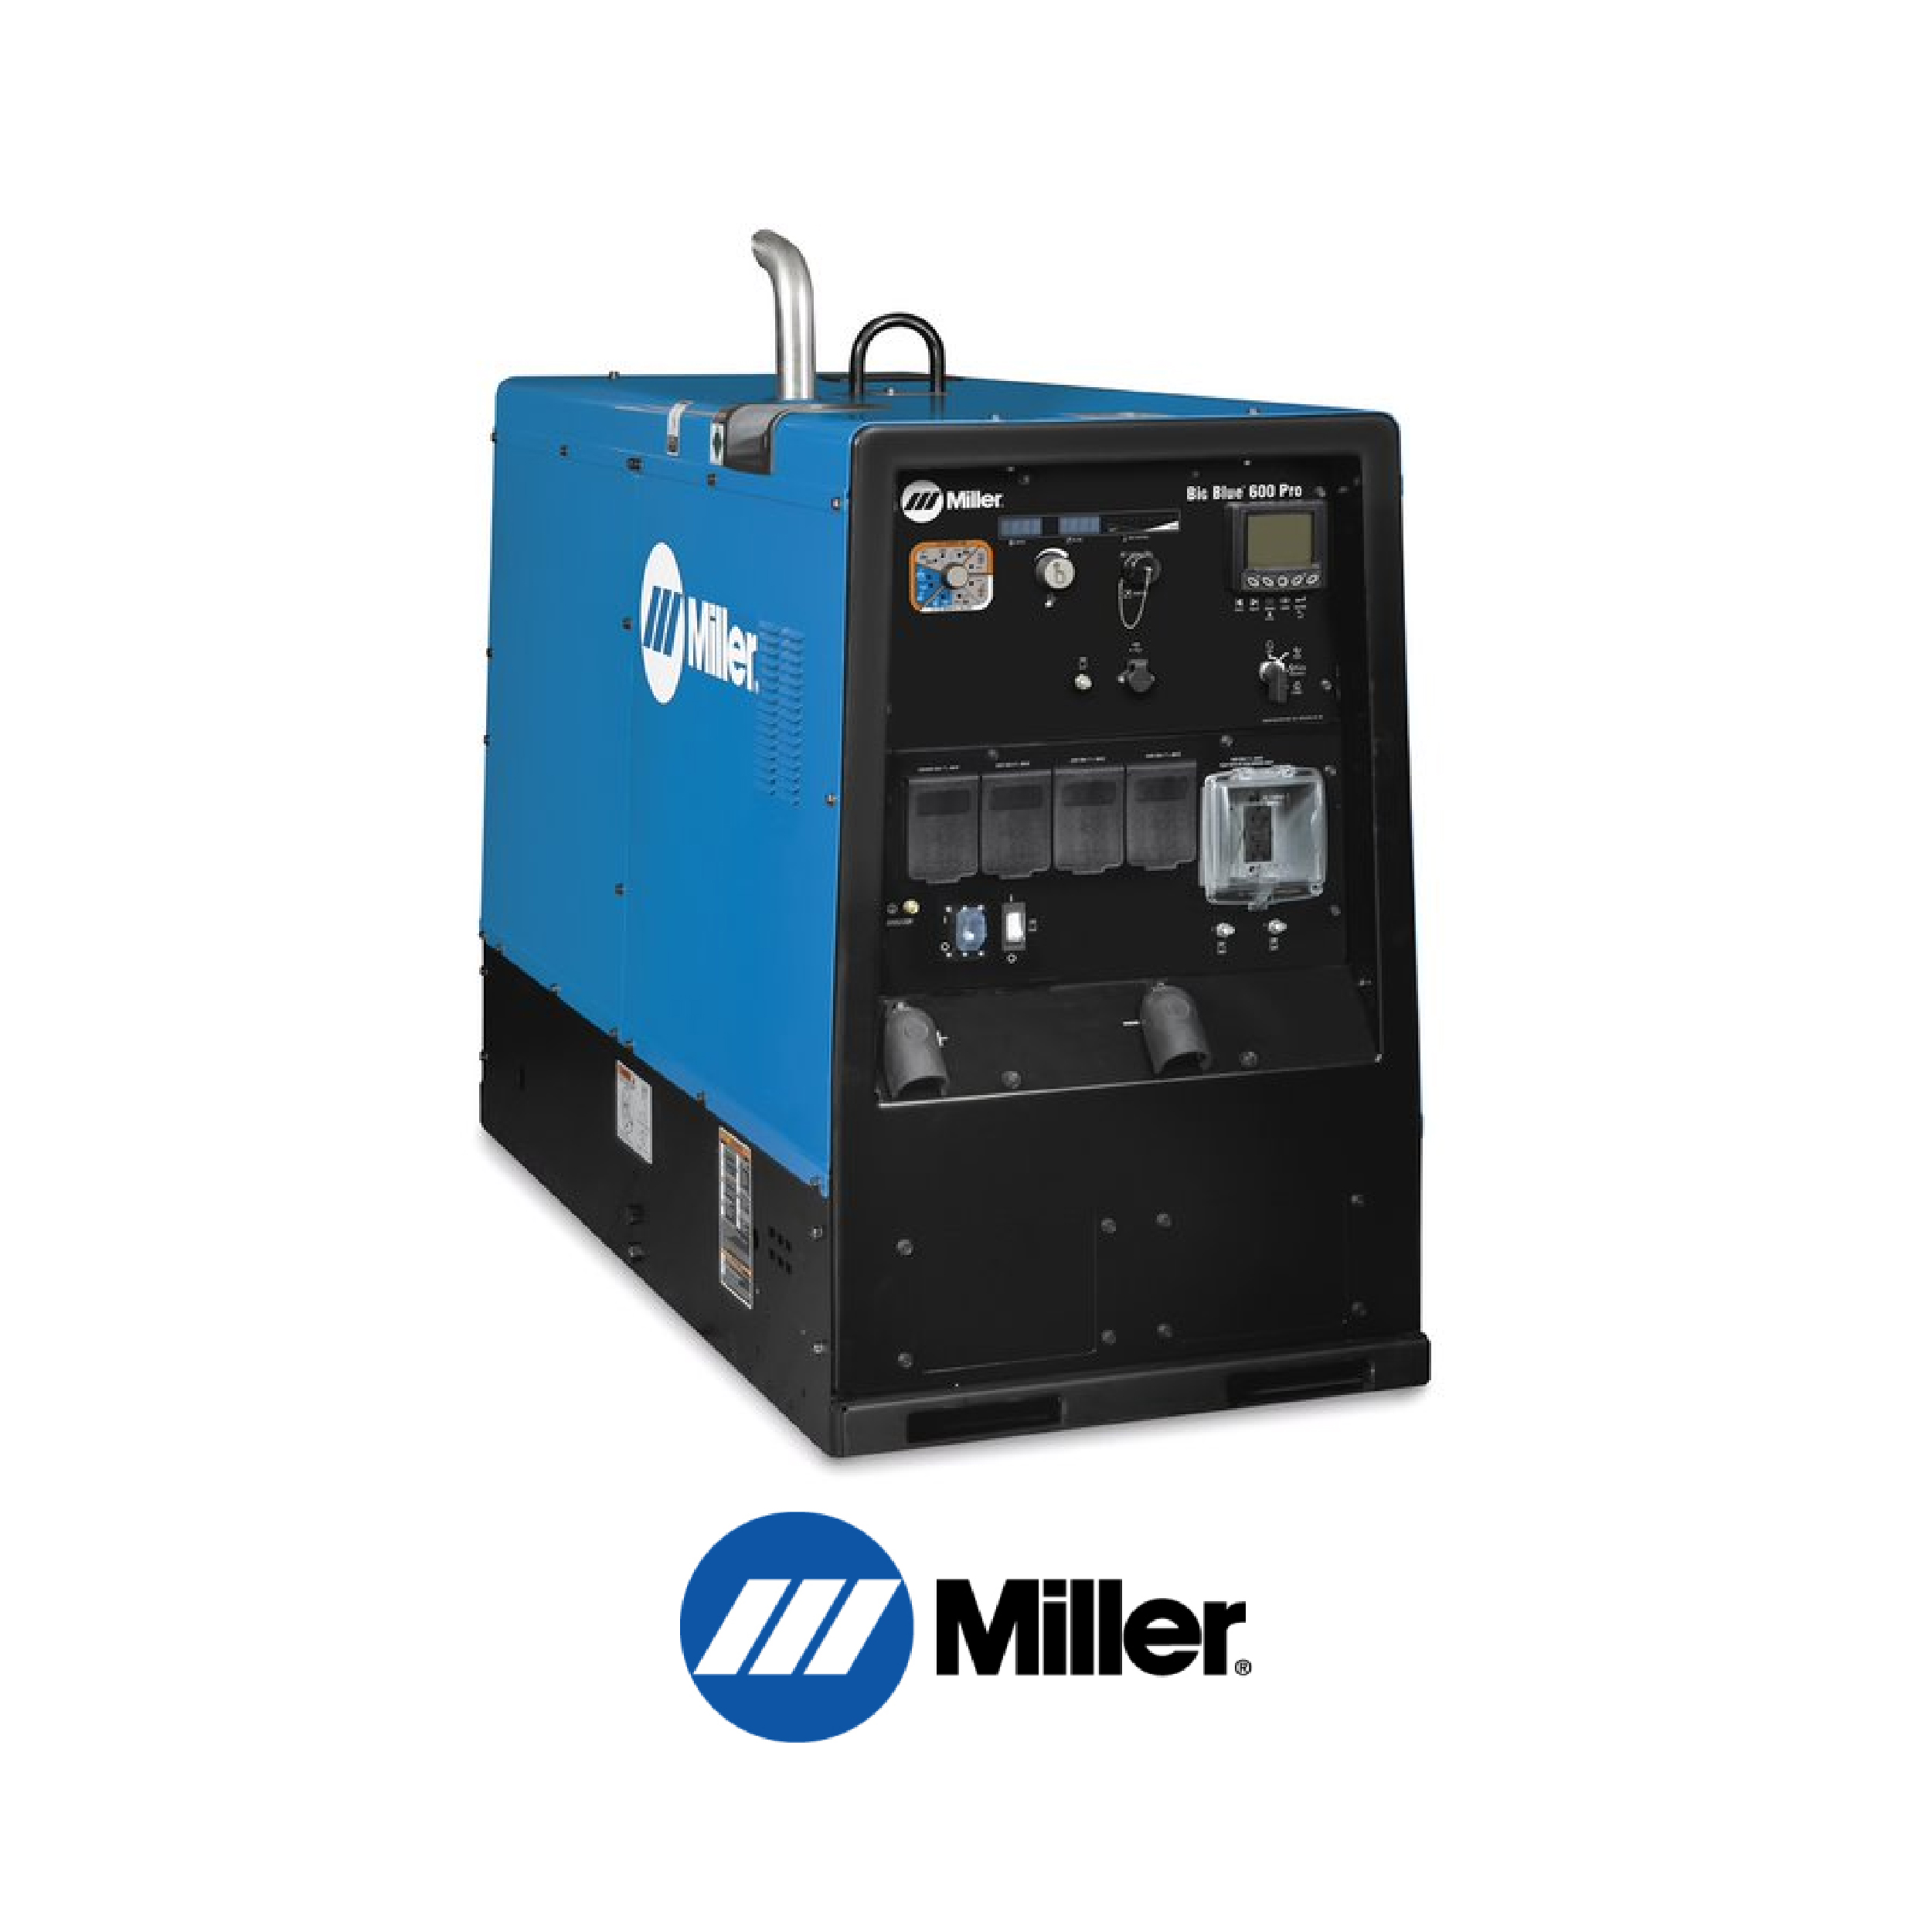 Miller-Welding-Machine.jpg